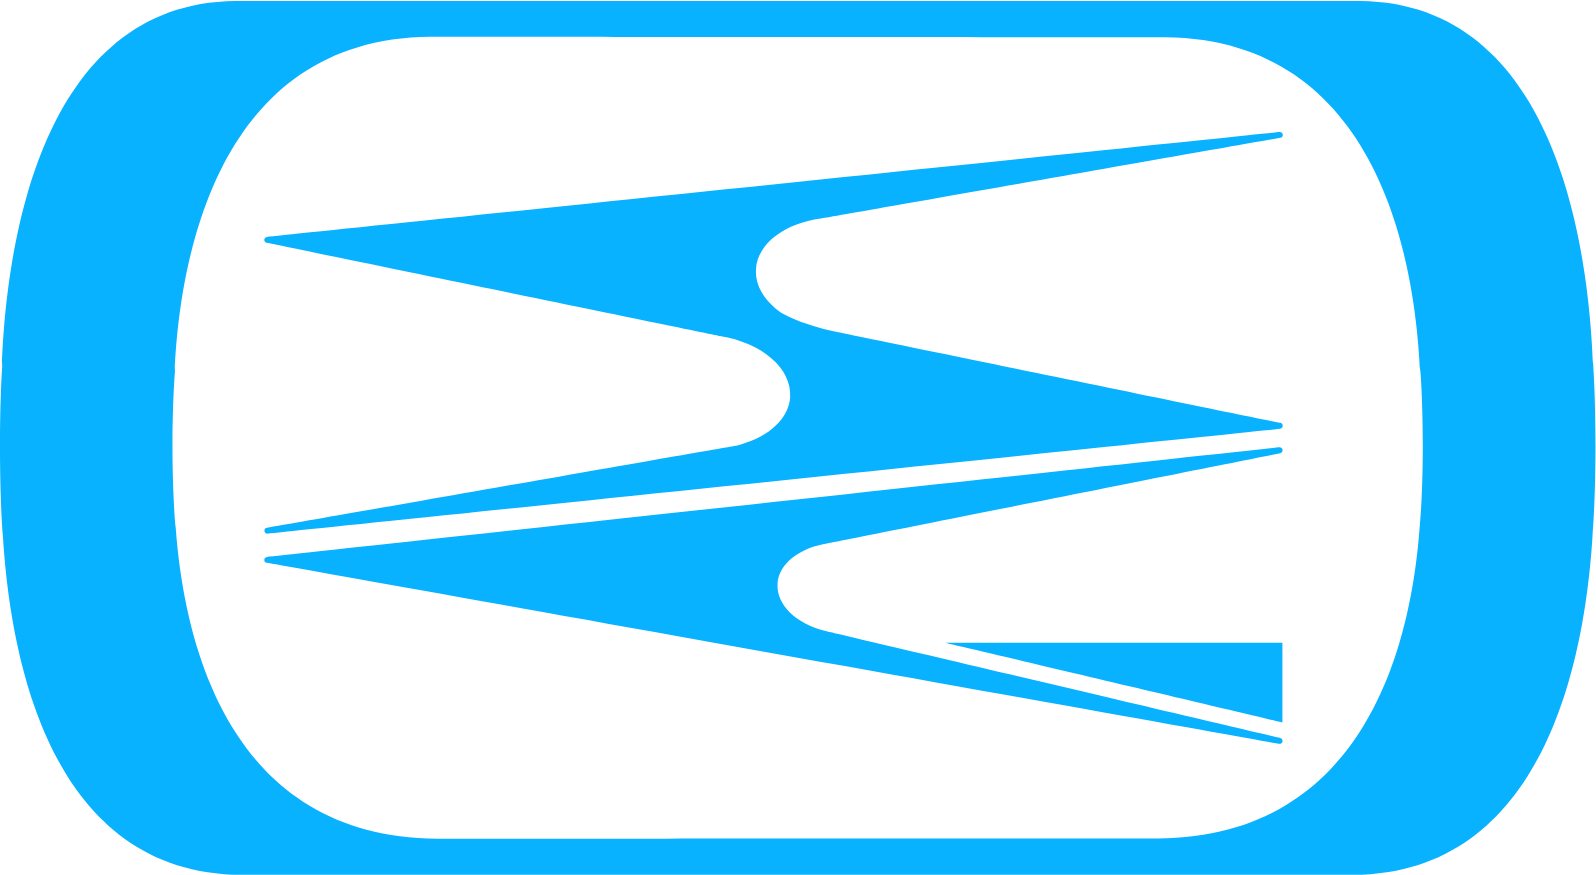 Smurfit Kappa Group logo (transparent PNG)